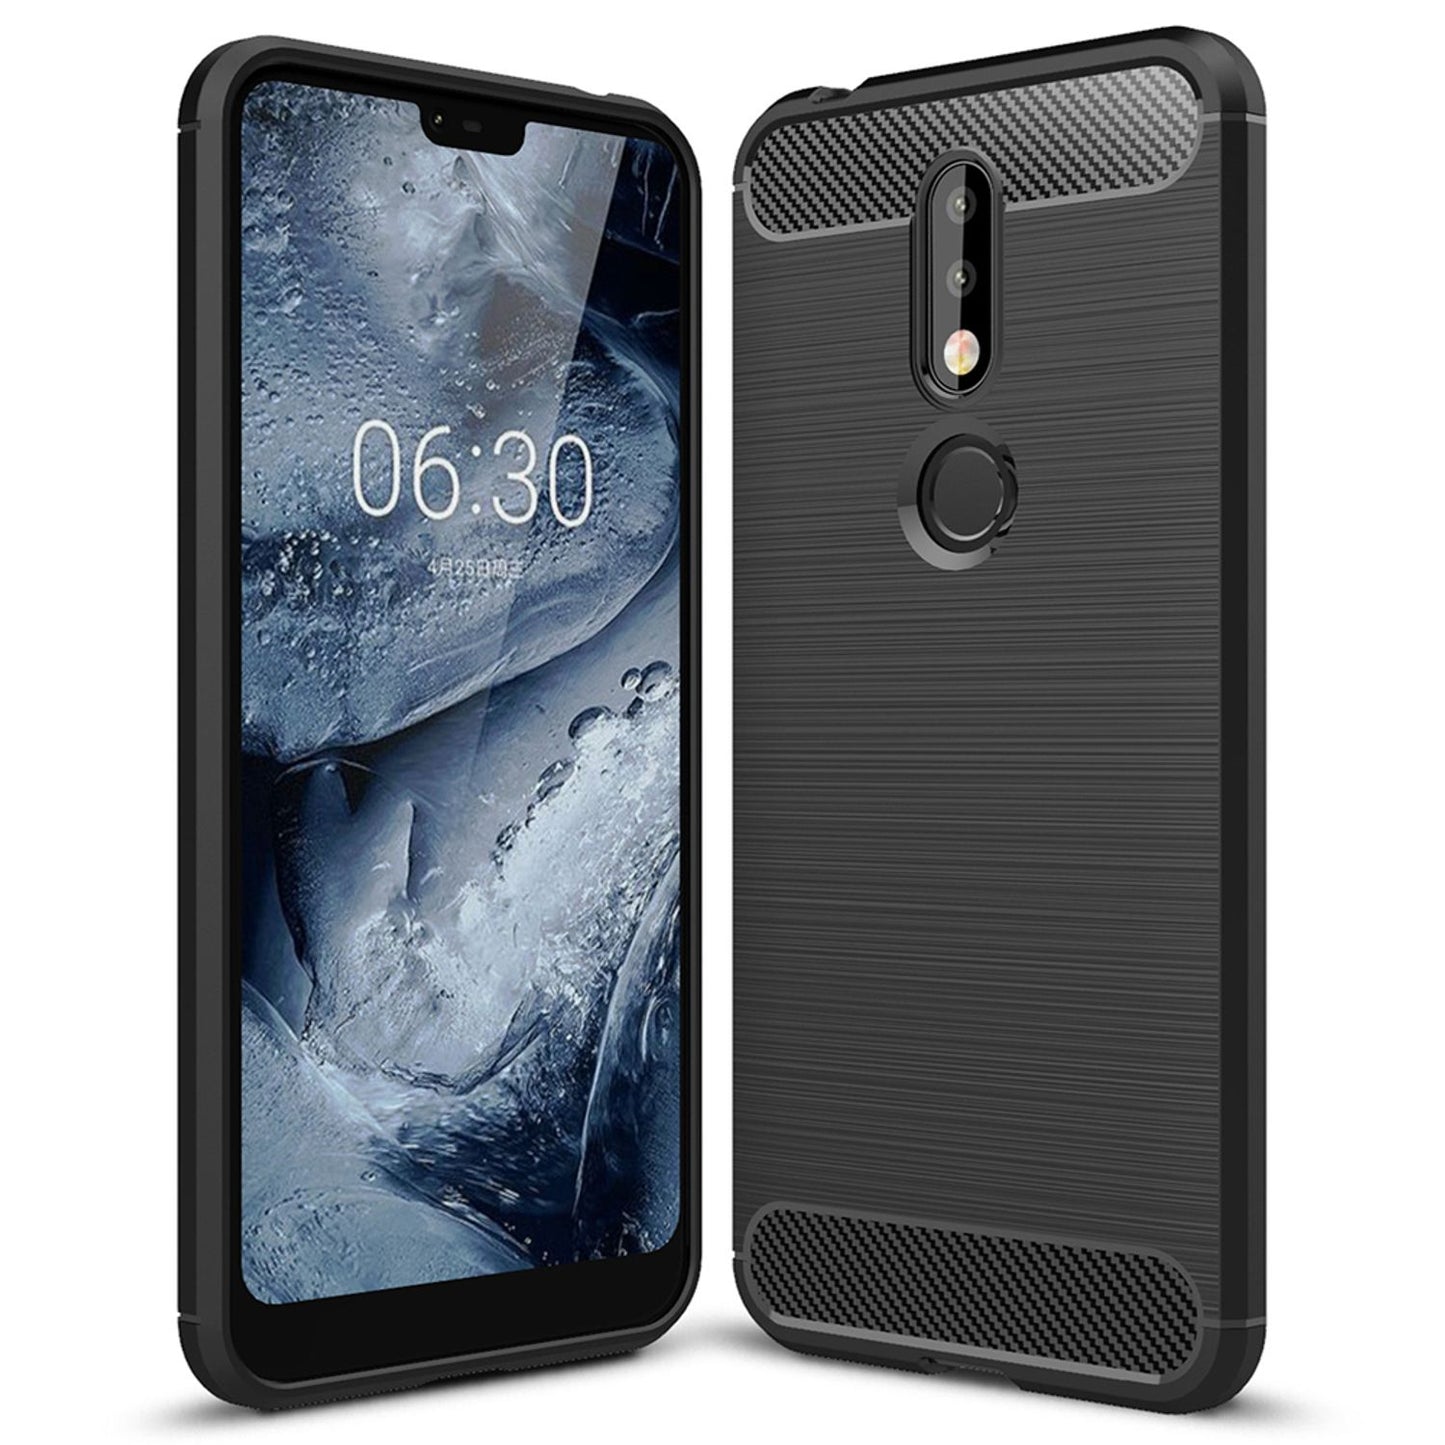 NALIA Handy Hülle für Nokia 7.1 (2018), Dünnes Silikon Case Cover Bumper Etui